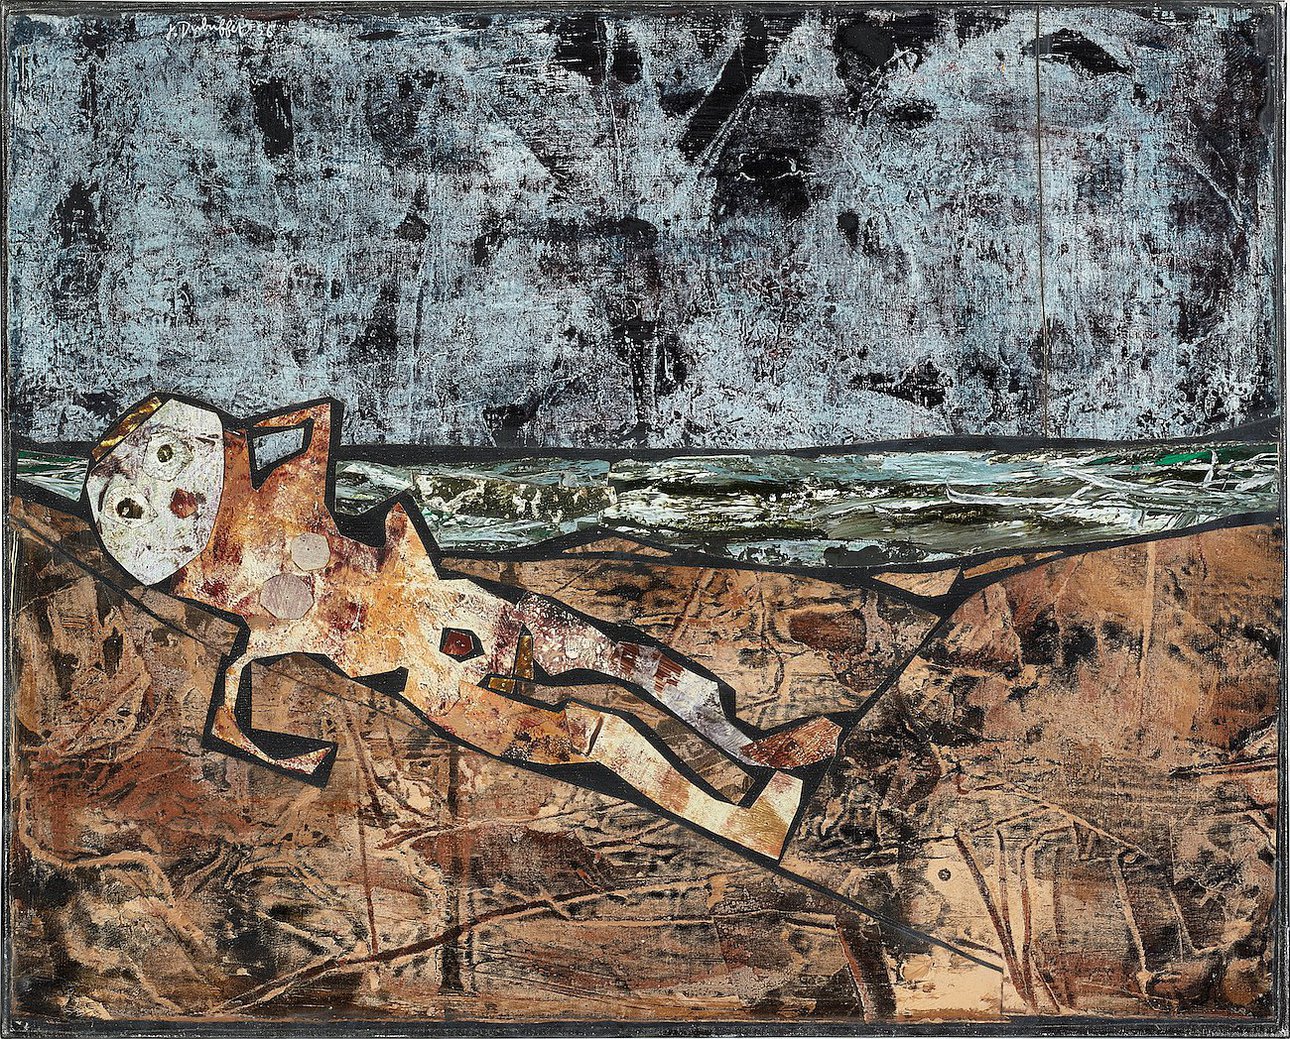 Jean Dubuffet. Bain de Soleil, 1956